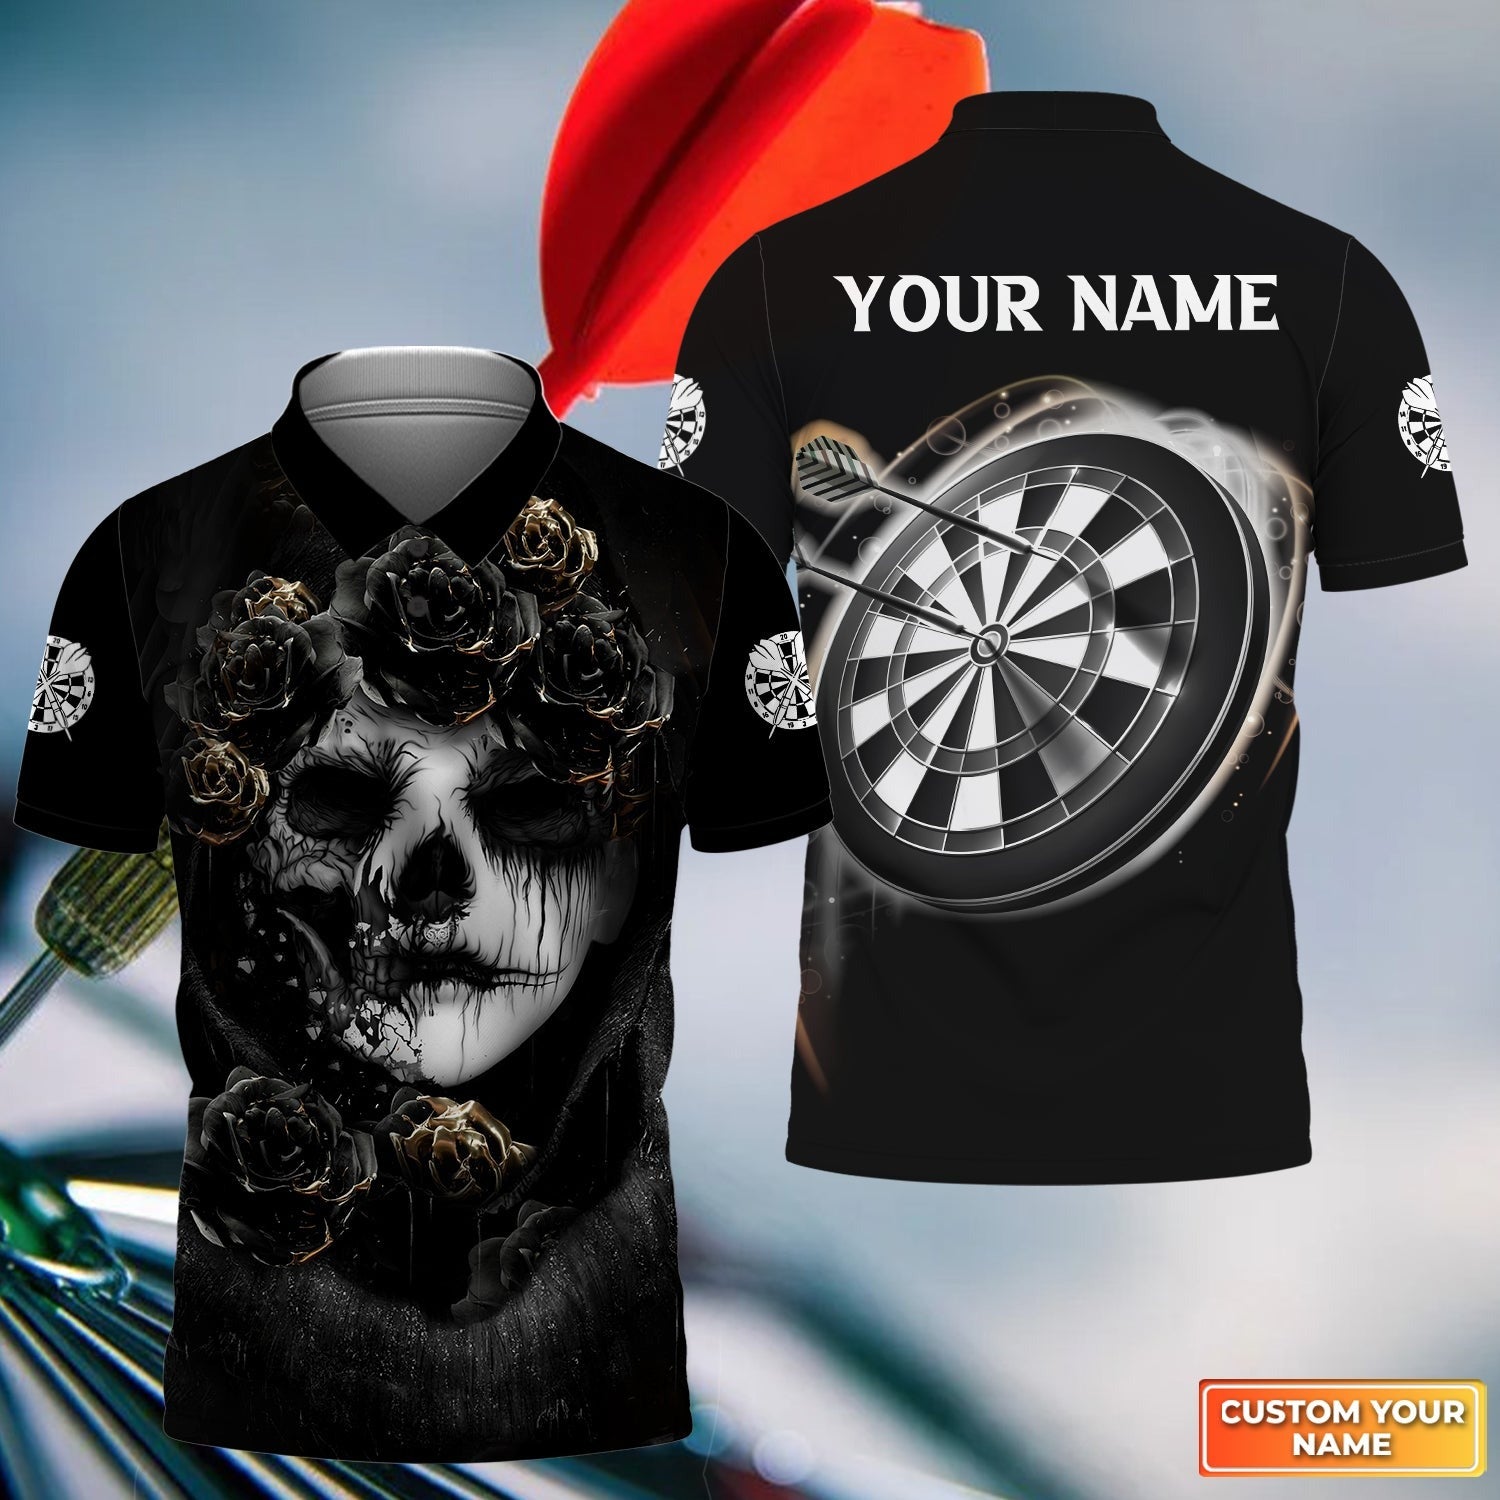 Customized Name Darts Men Polo Shirt, Skull Girl Dartboard Personalized Skull Girl And Darts Polo Shirt - Gift For Darts Players Uniforms, Darts Lovers